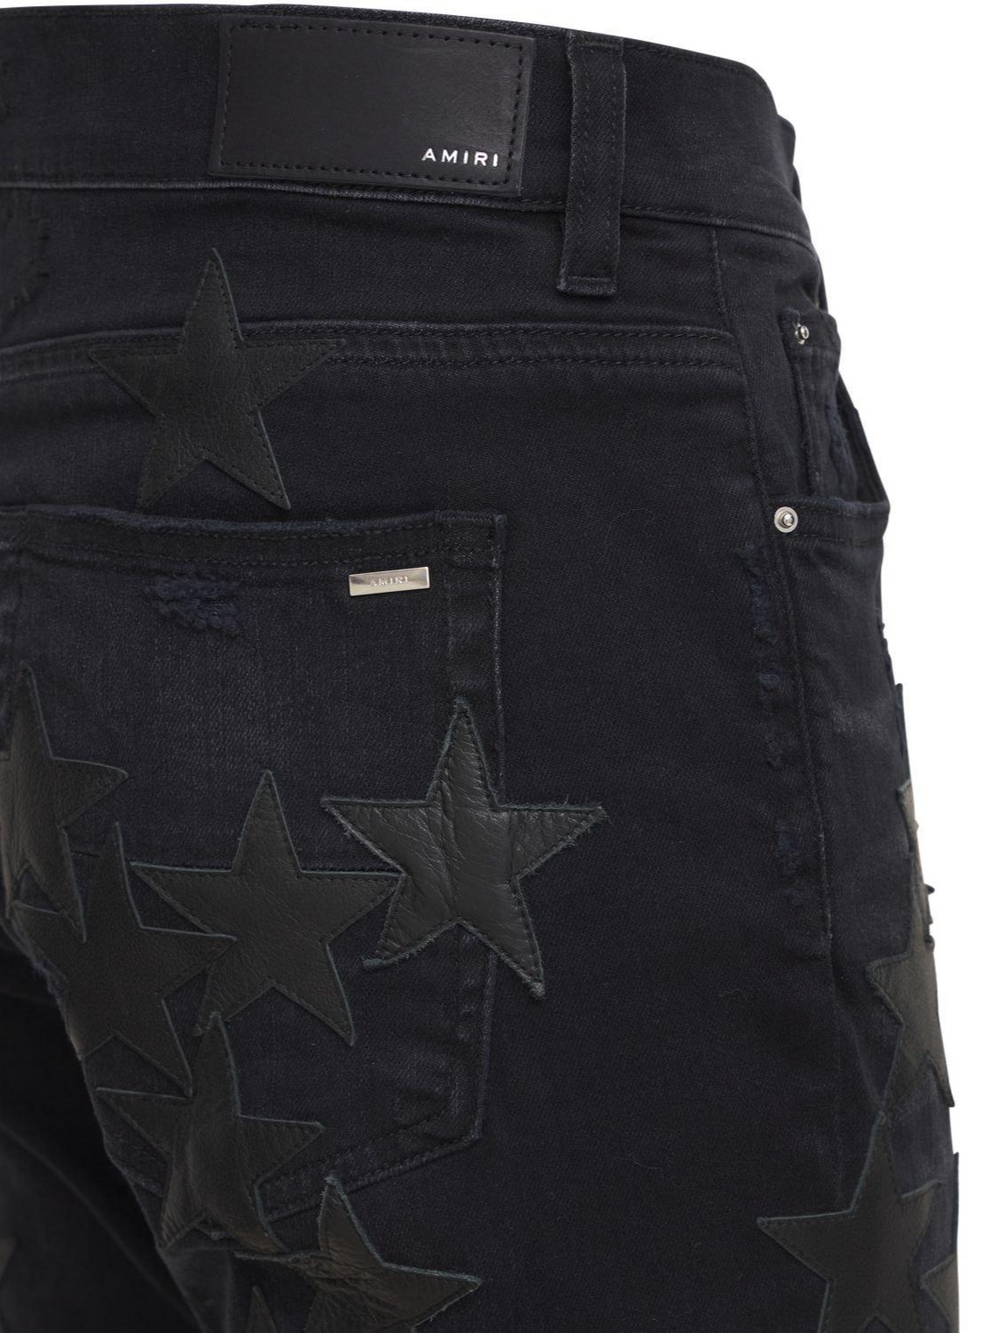 Amiri x Chemist 'Black' Star Patch Jeans